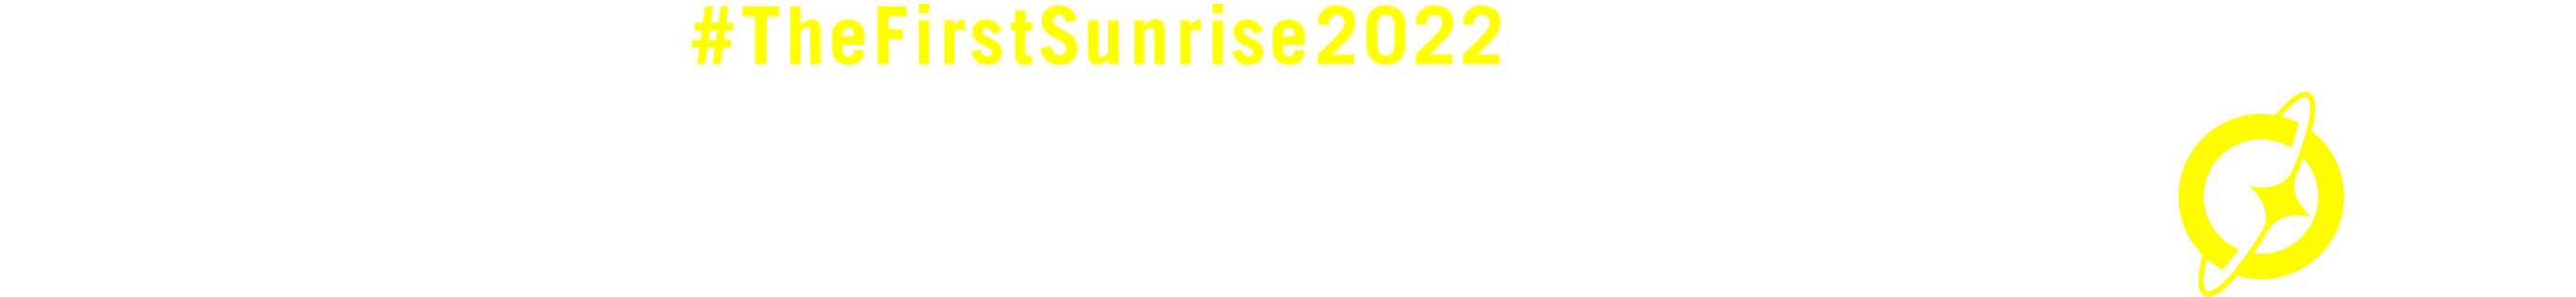 THE SPACE SUNRISE LIVE 2022